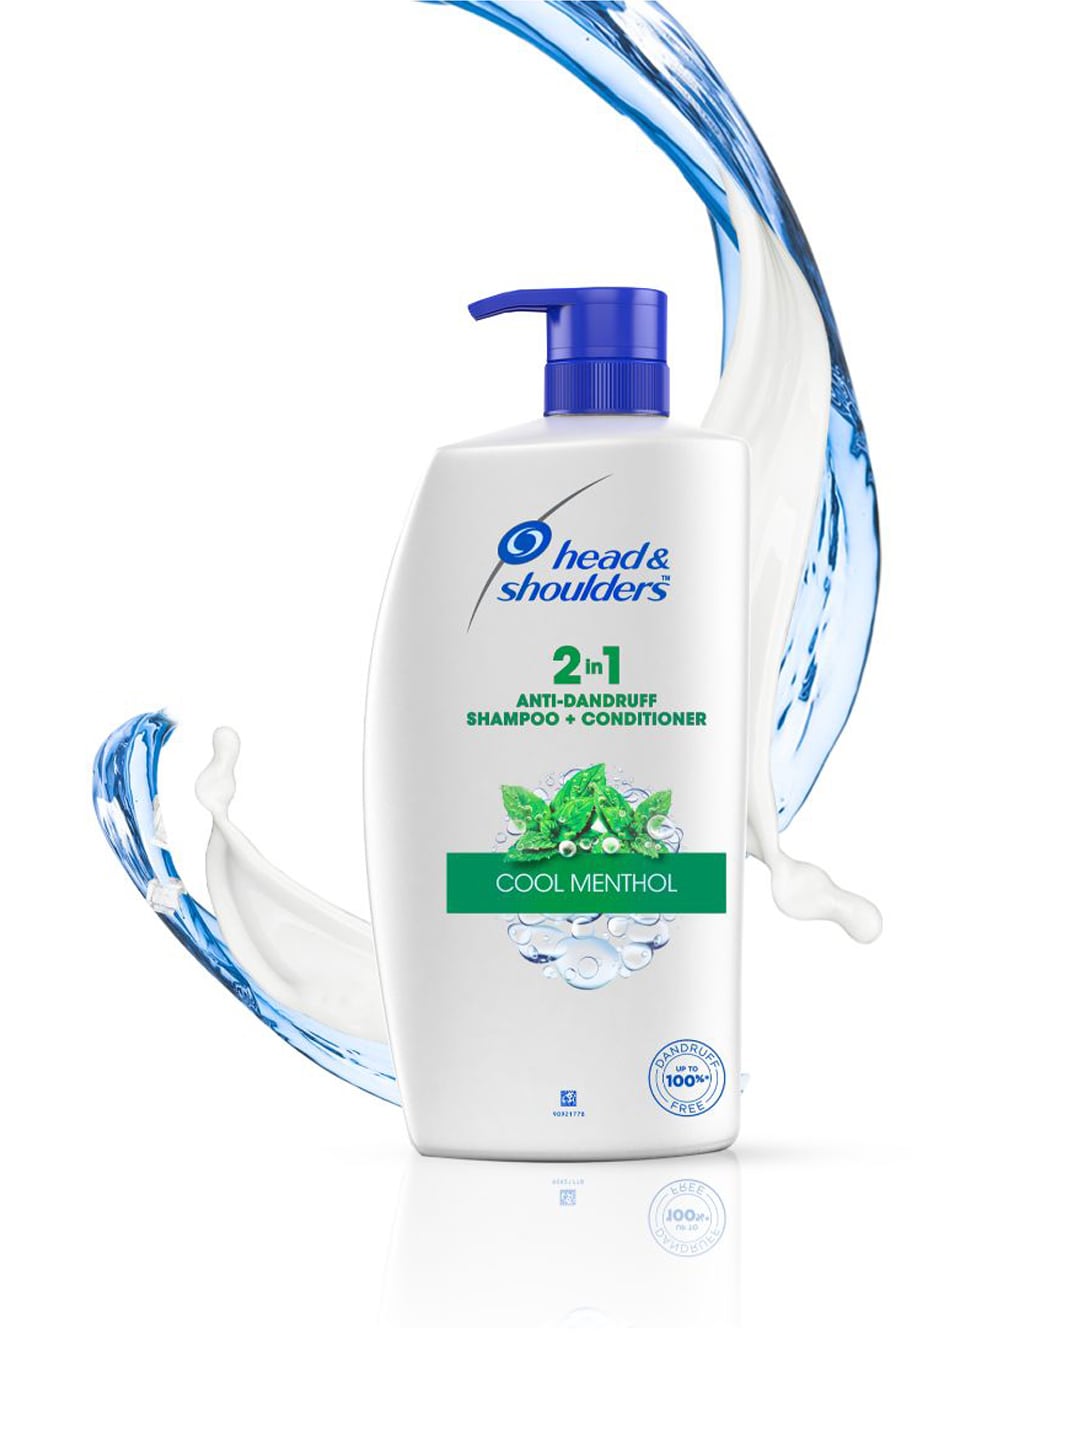 Head & Shoulders Unisex 2 in1 Cool Menthol Anti-Dandruff Shampoo + Conditioner 1 L Price in India